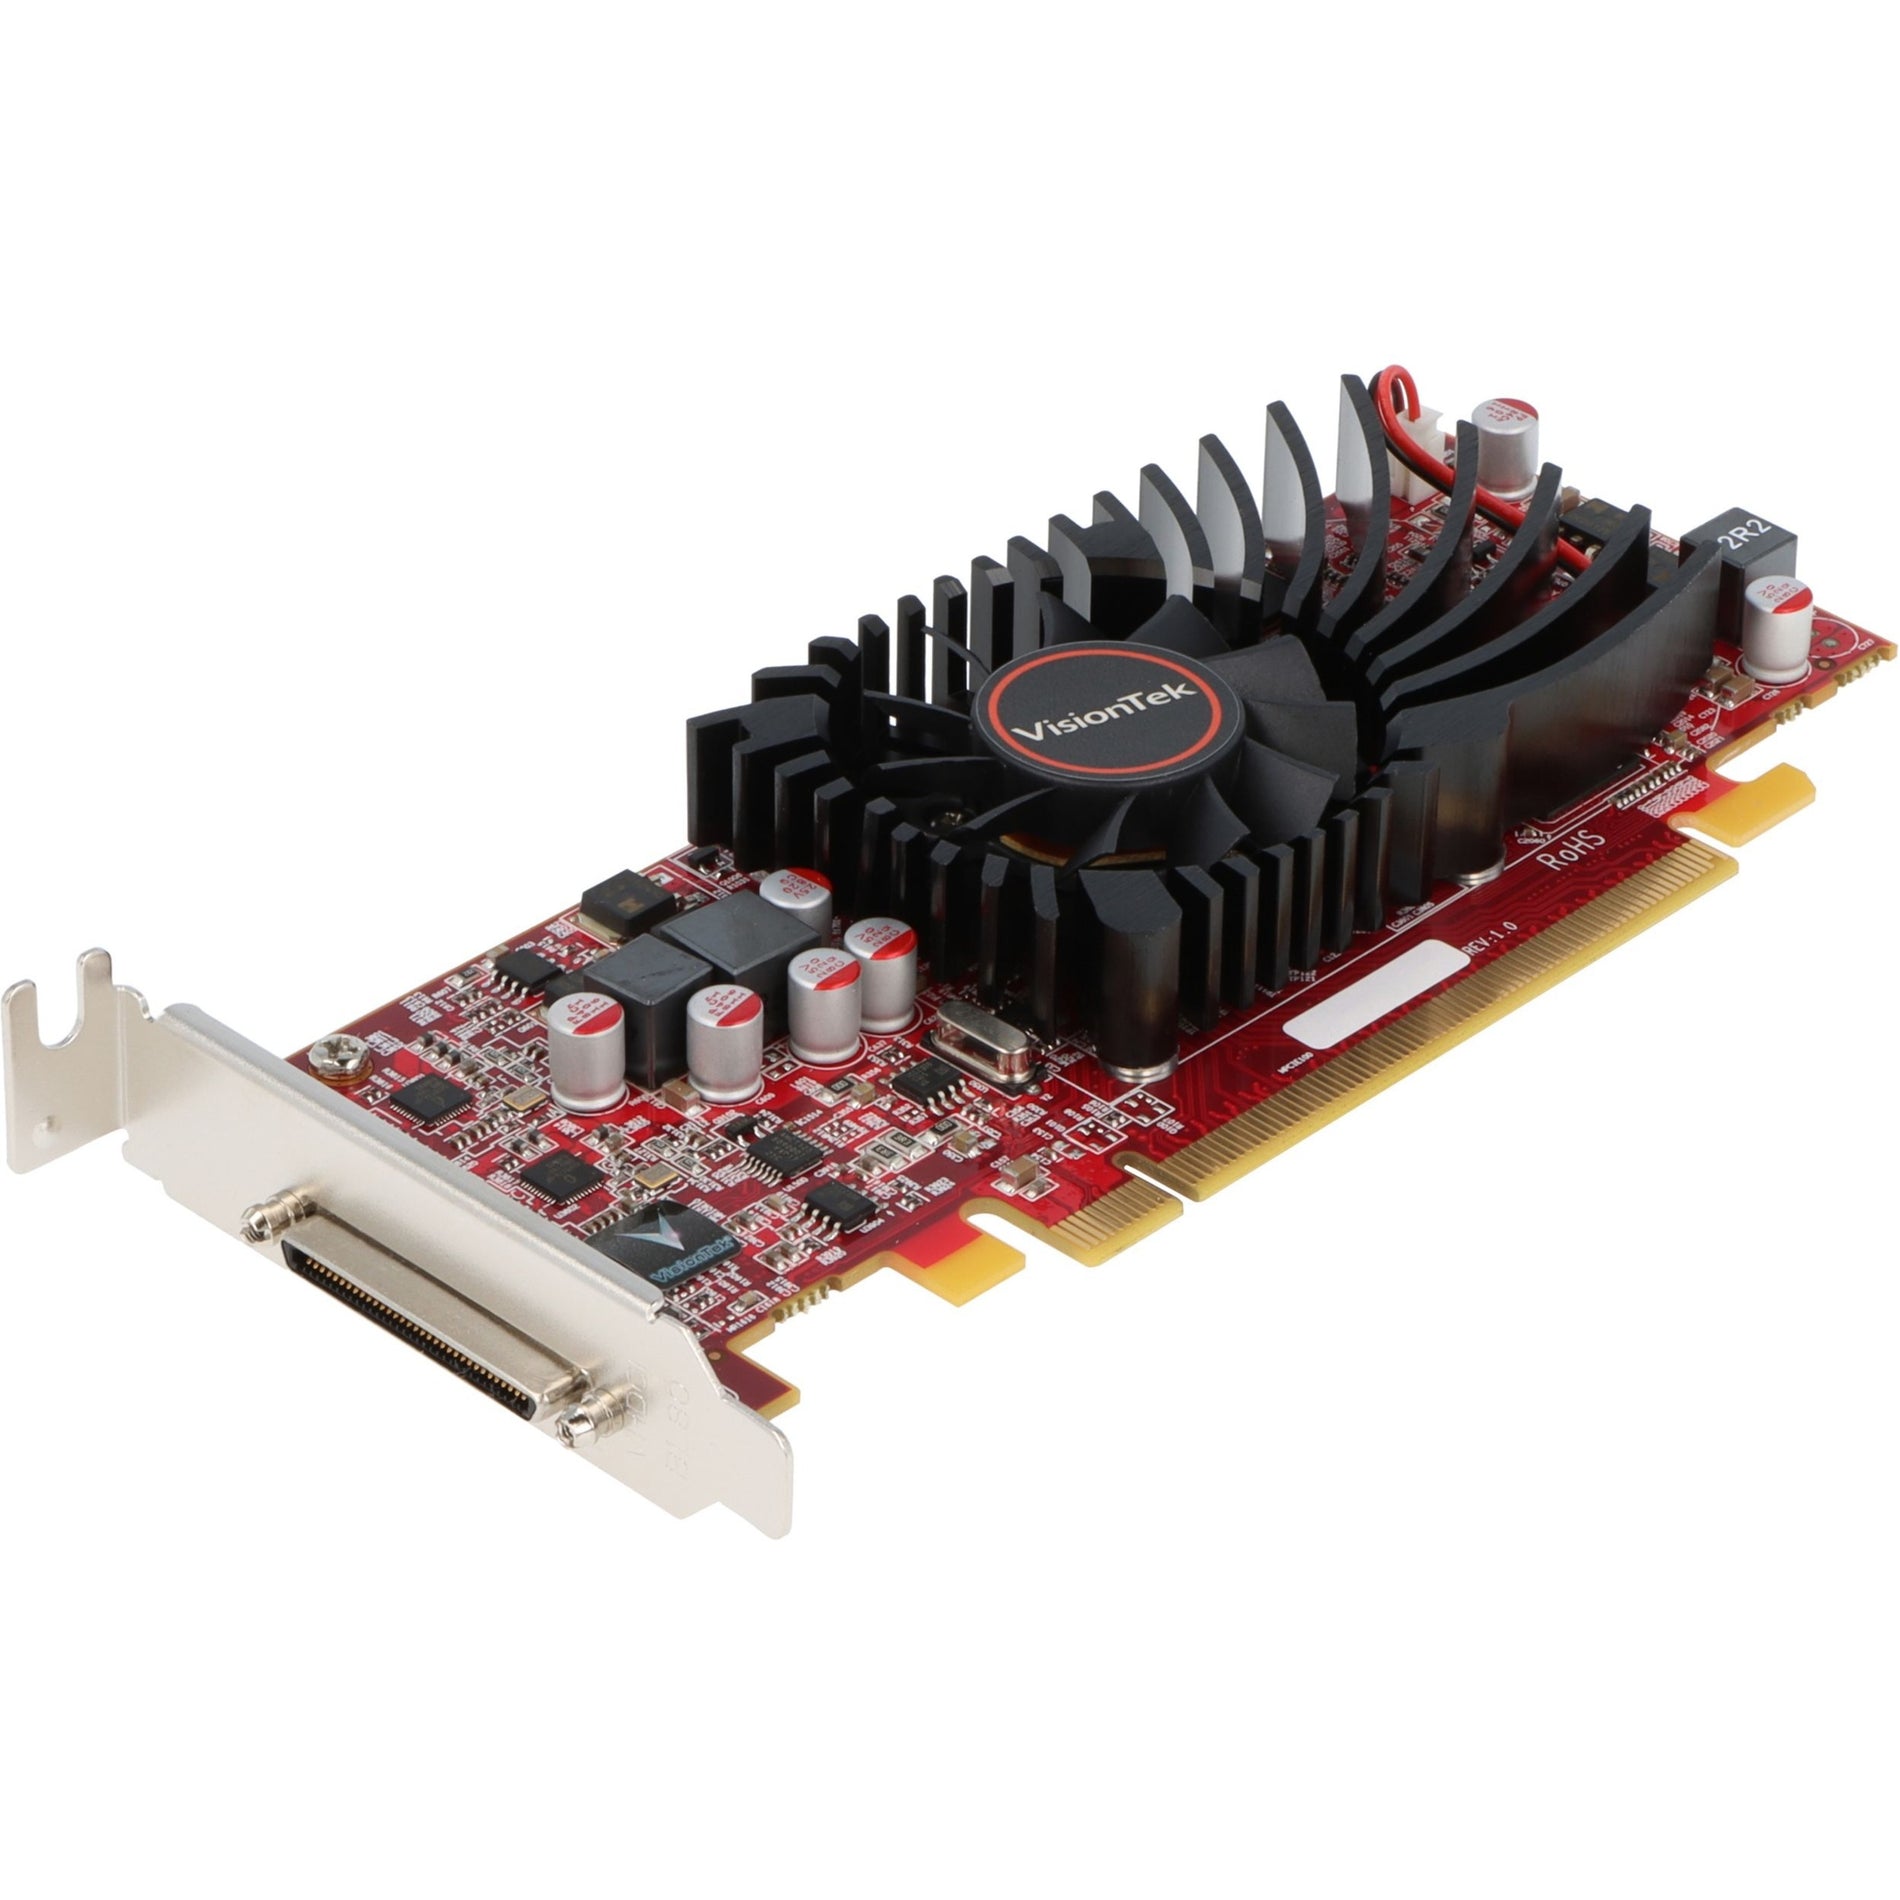 VisionTek 900345 Radeon HD 5570 Graphics Card, 1GB DDR3, 4x DVI-D, Low-profile